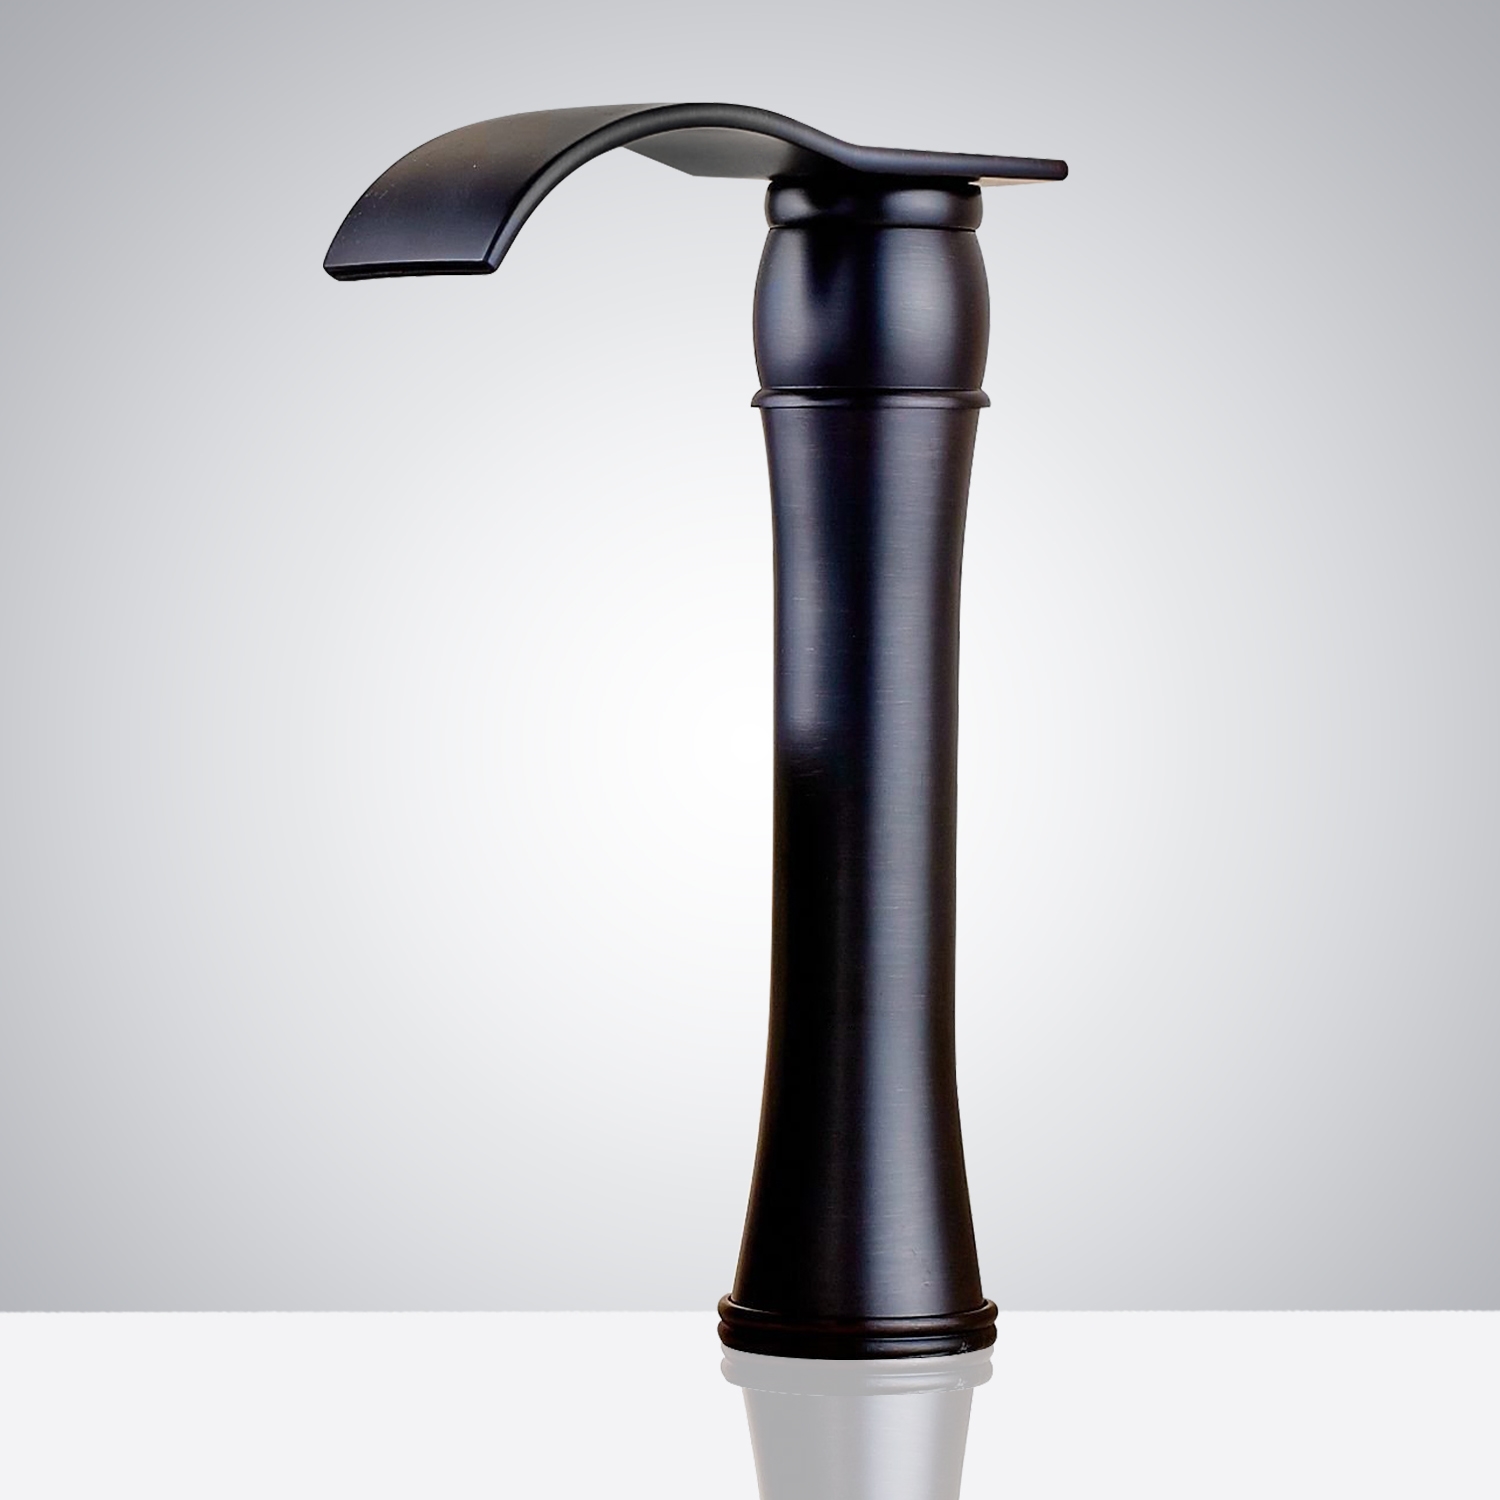 Fontana Matte Black Commercial Hands Free Deck Mount Sensor Faucet